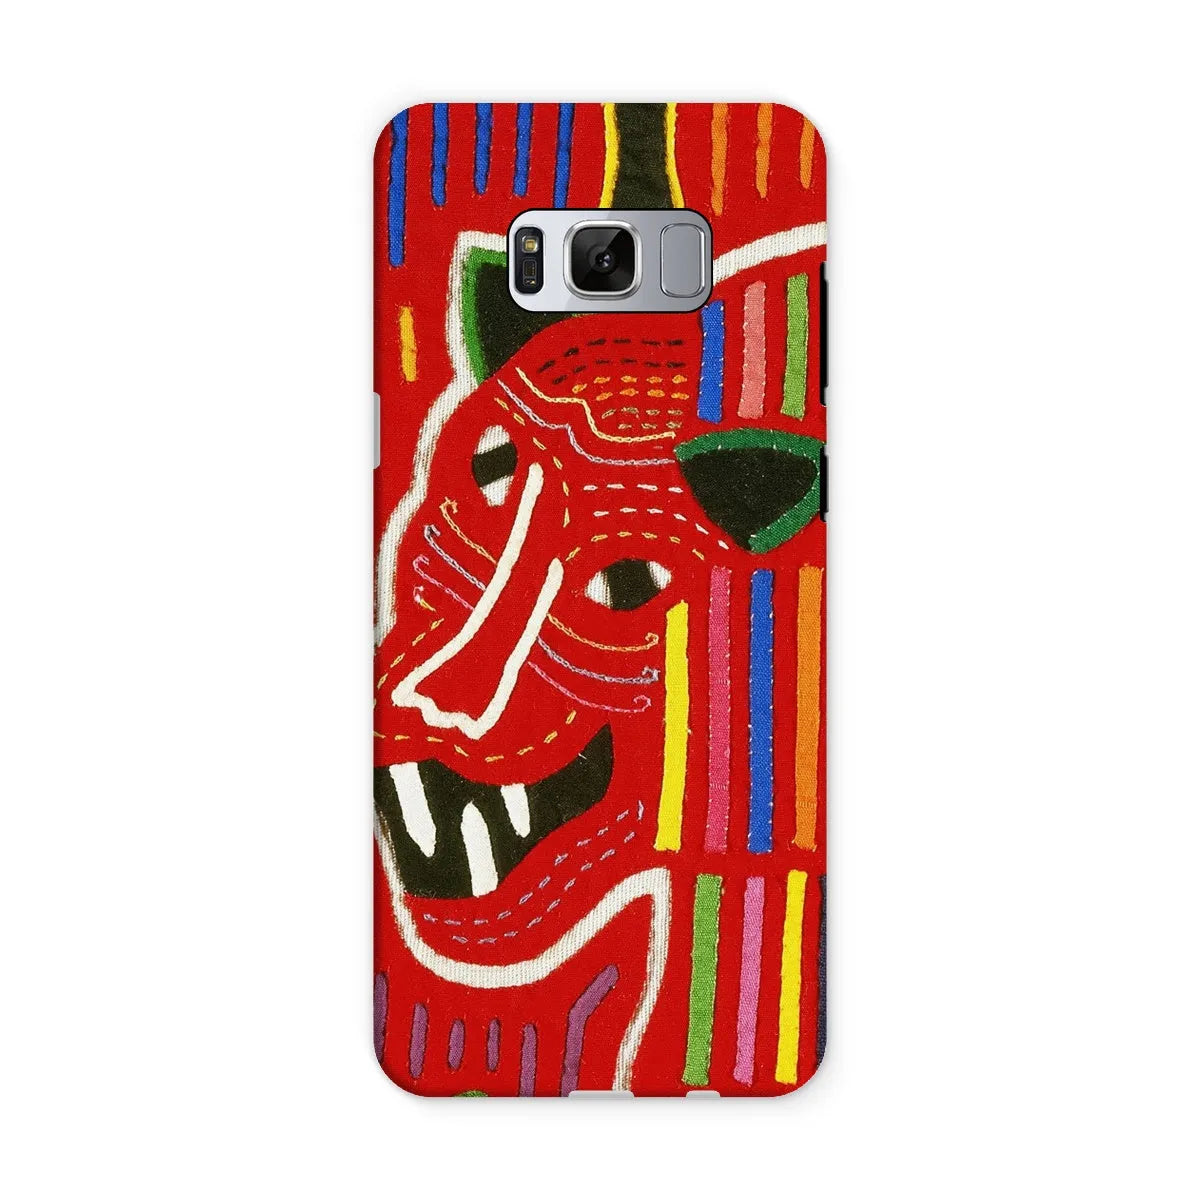 Roaring Tiger - Mola Needlework Art Phone Case - Samsung Galaxy S8 / Matte - Mobile Phone Cases - Aesthetic Art